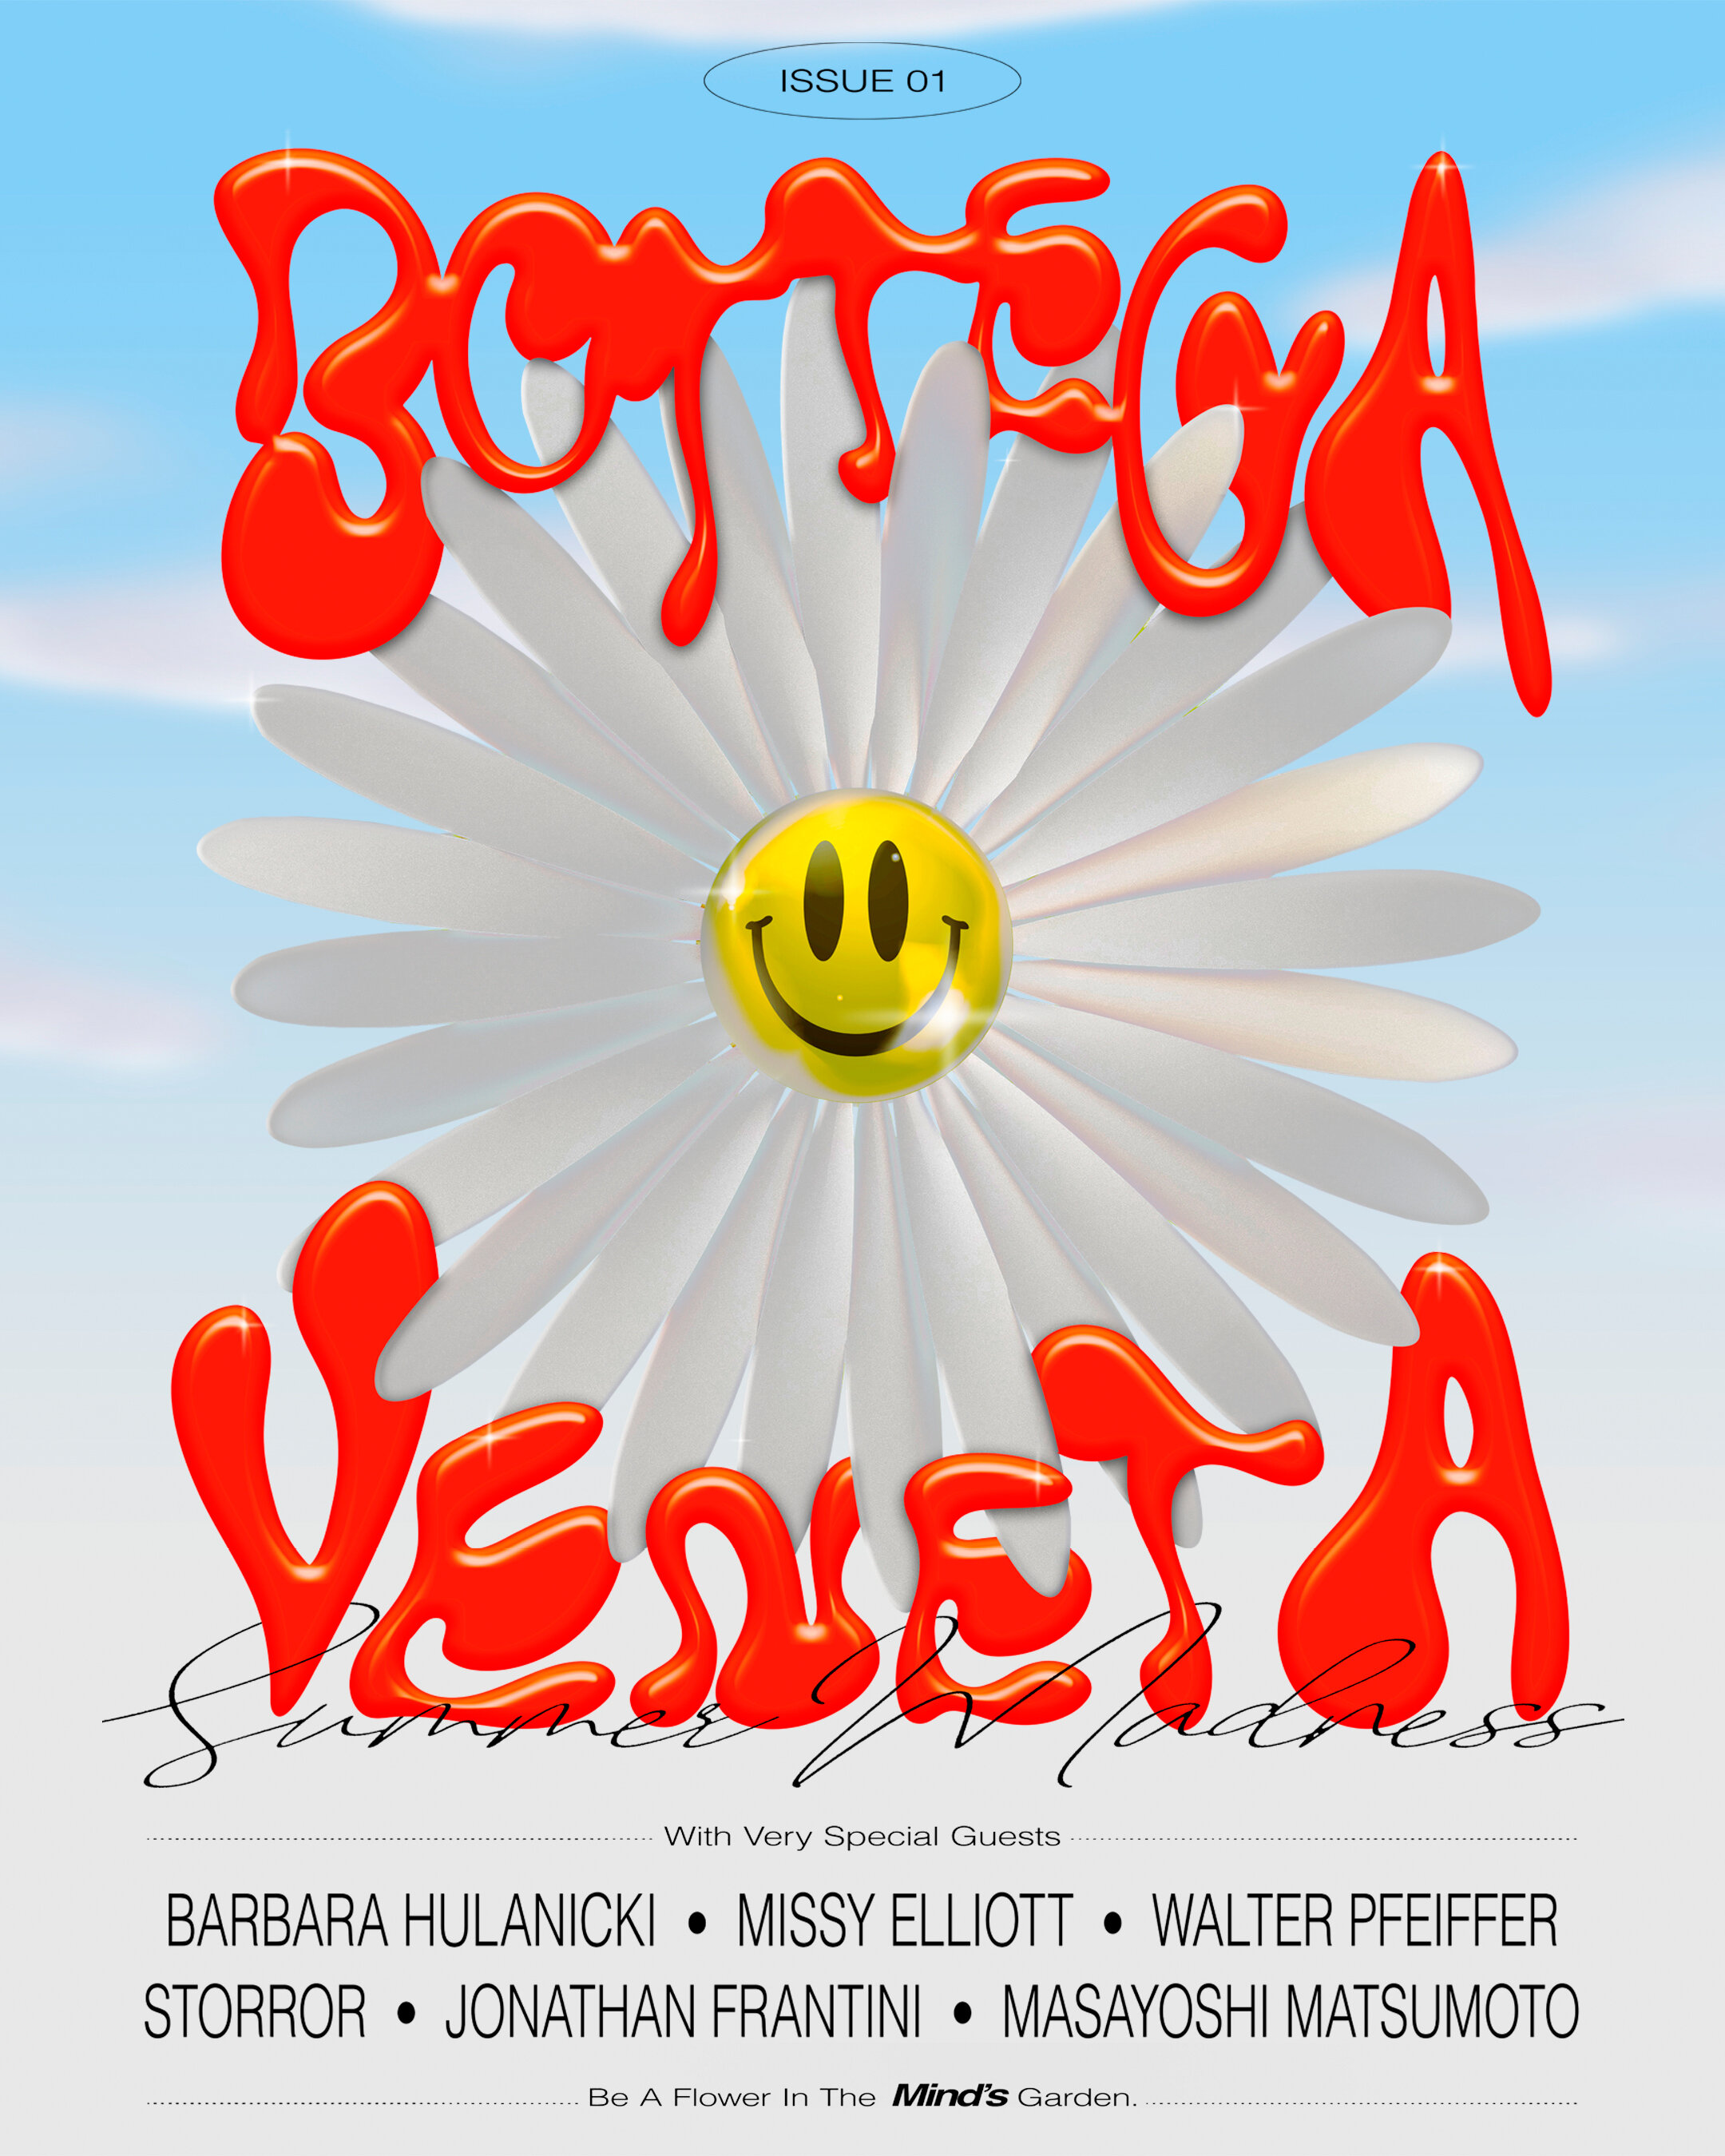 Bottega Veneta Issue 01 - Cover 2 by James Lacey.jpg